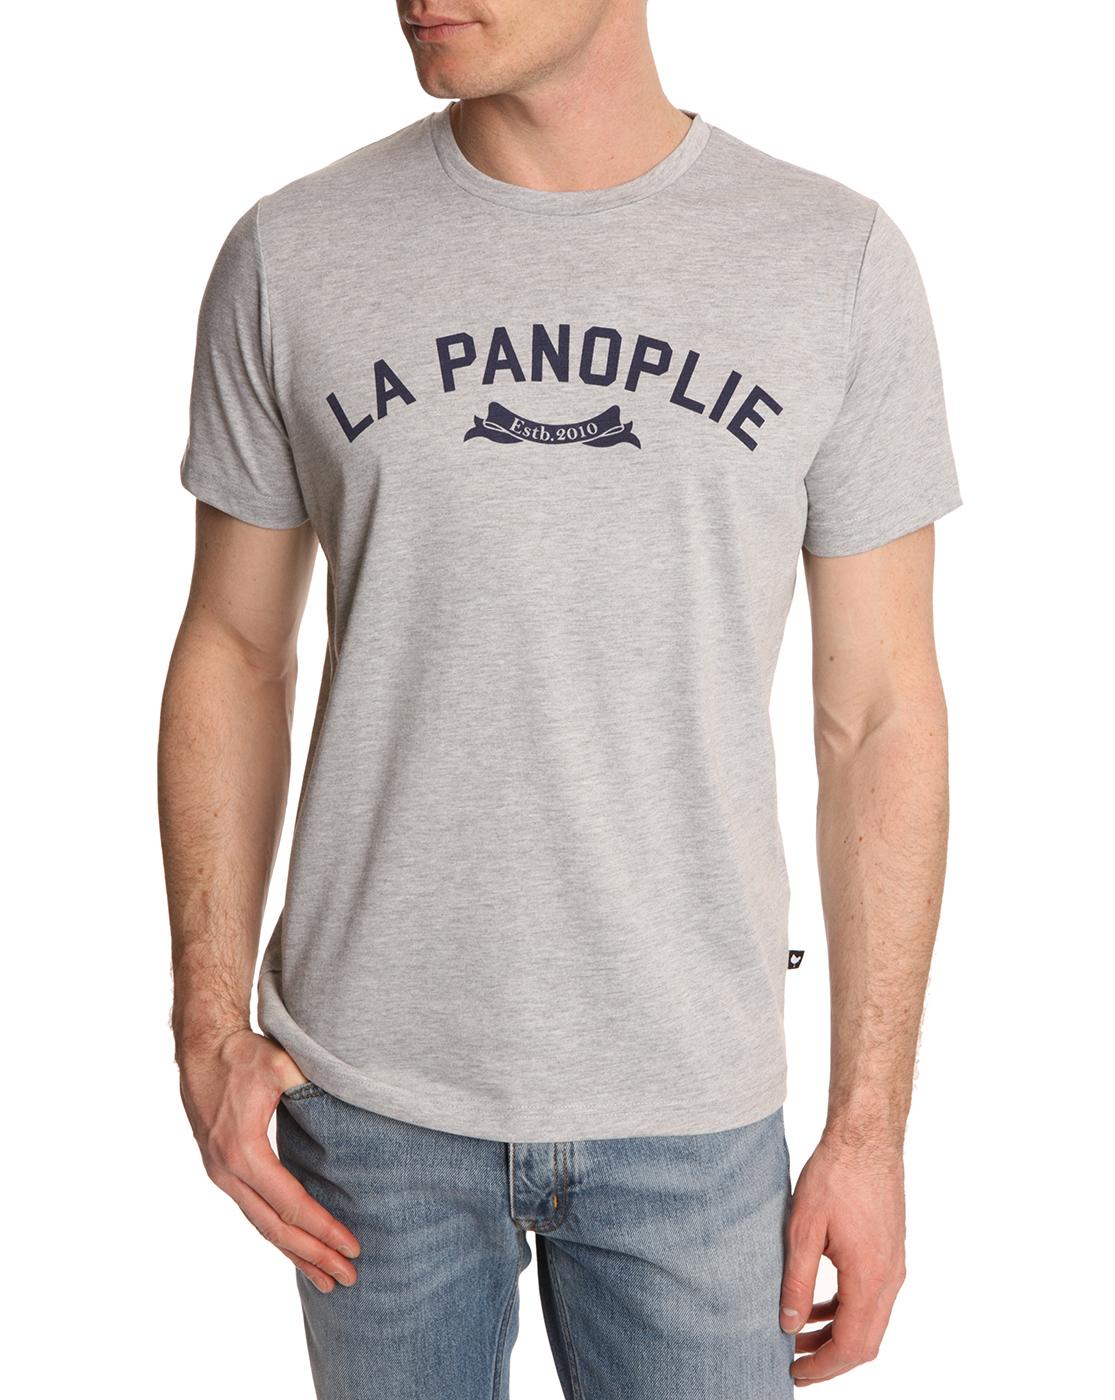 Foto Camiseta La Panoplie gris foto 477886